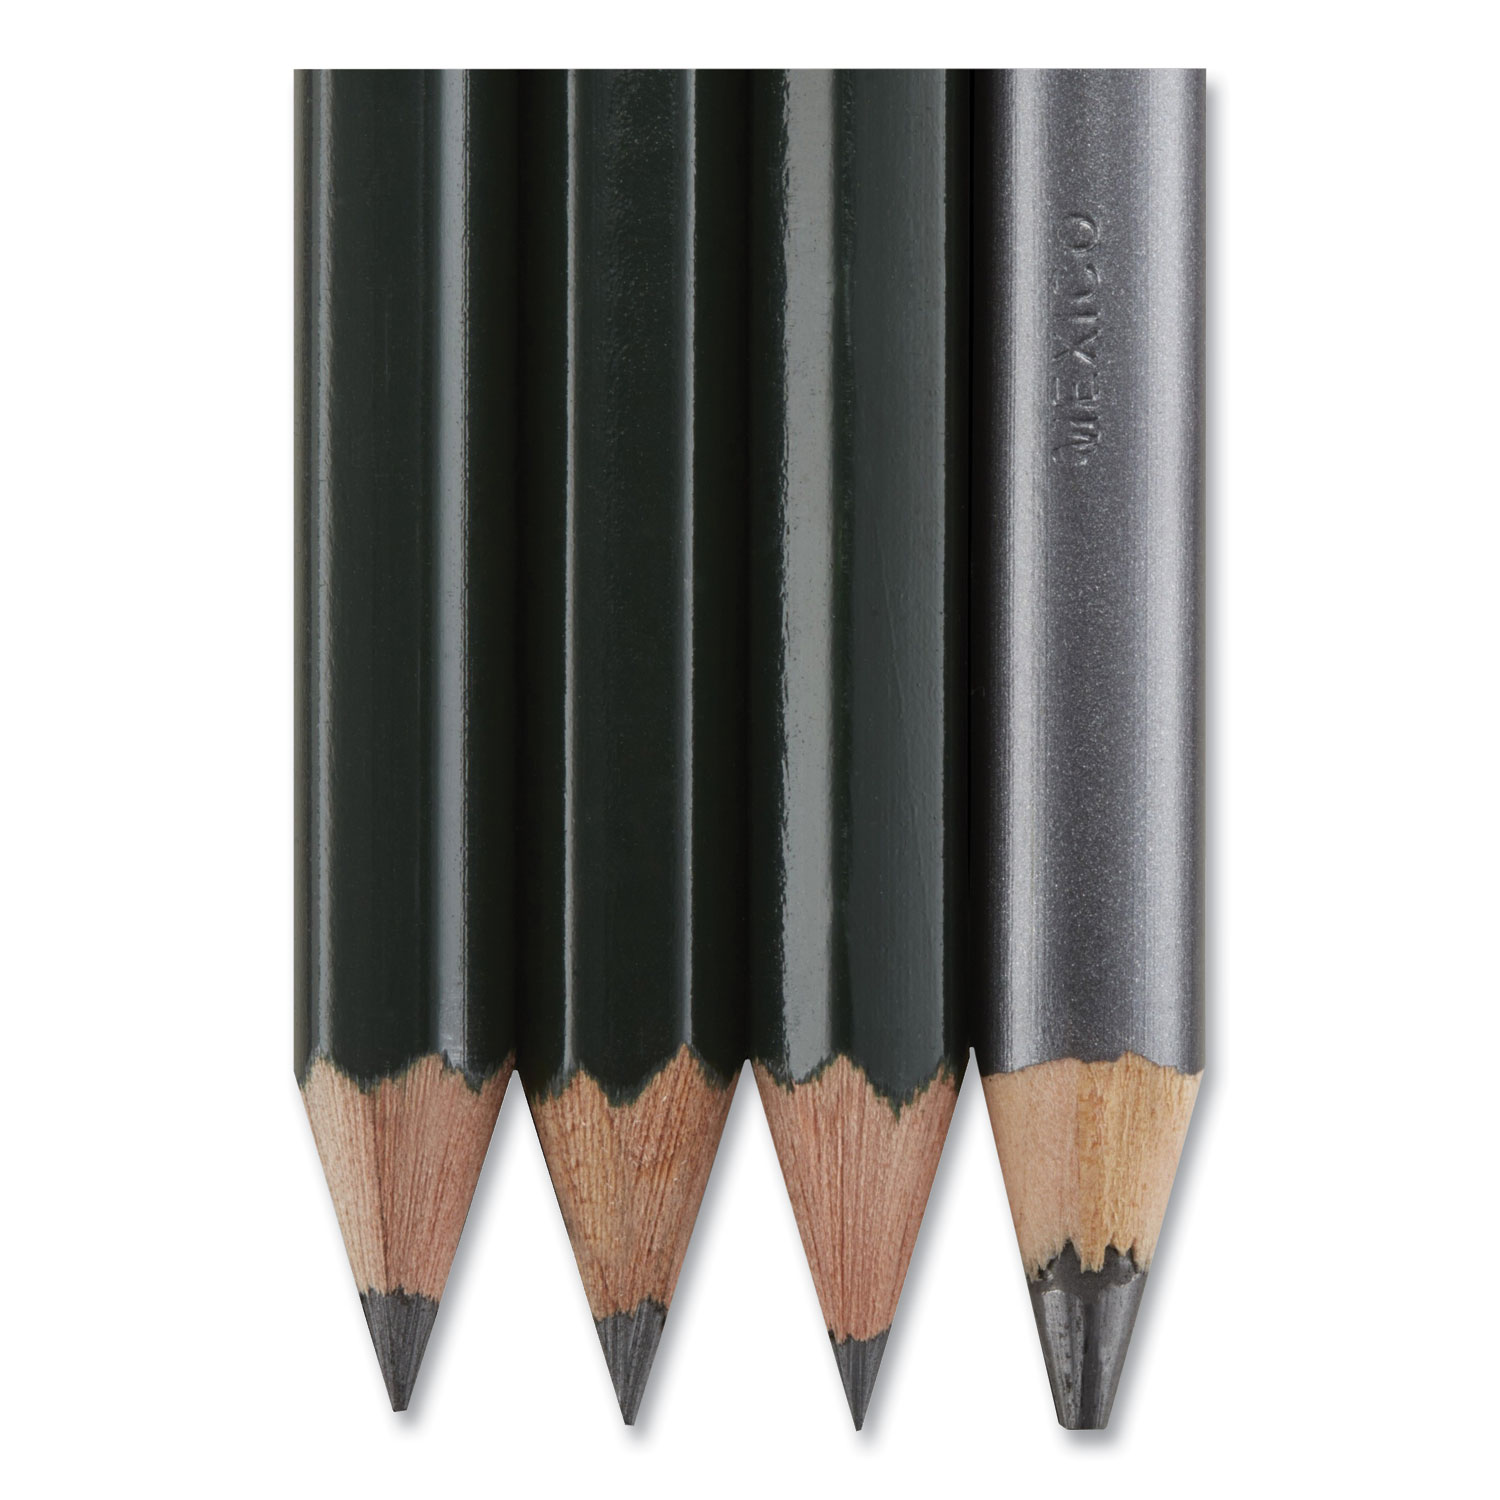 Prismacolor Ebony Jet Black Graphite Sketching Pencils, Box of 12